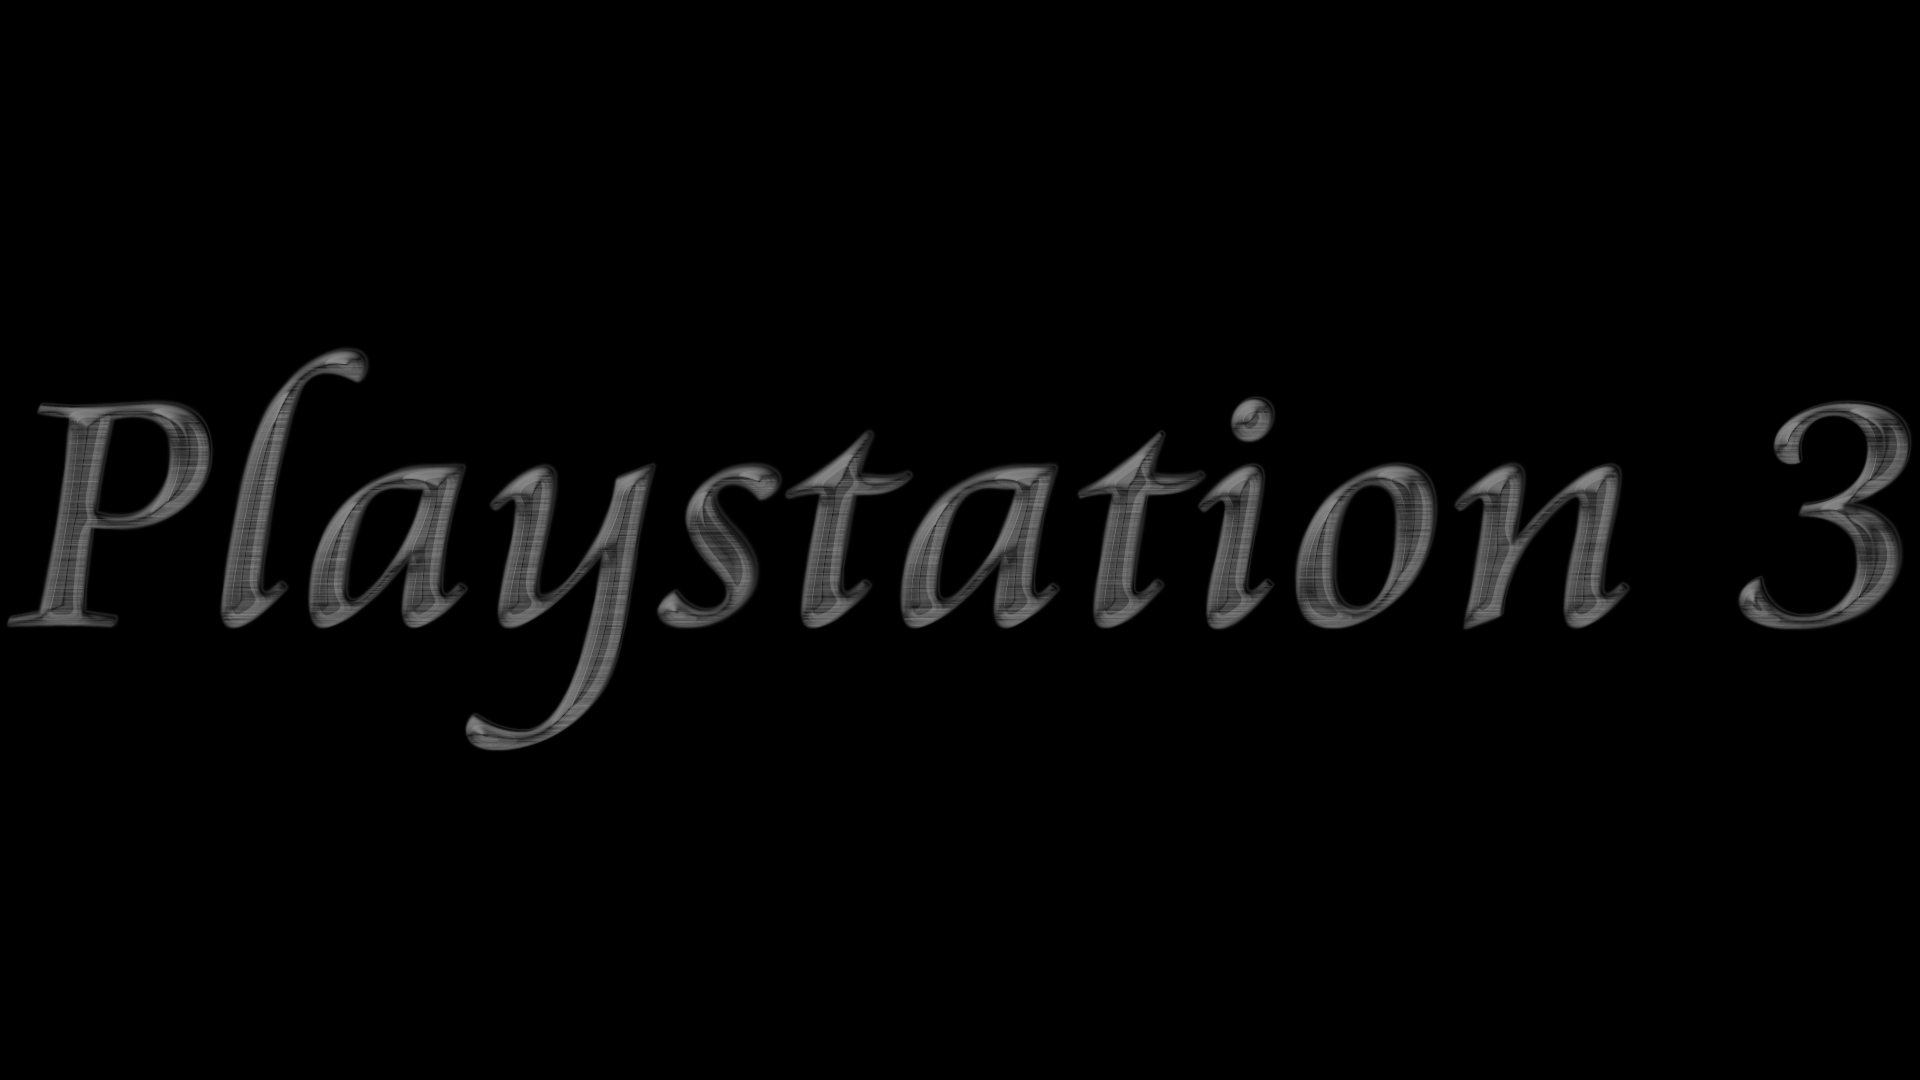 PlayStation Logo Wallpaper - WallpaperSafari